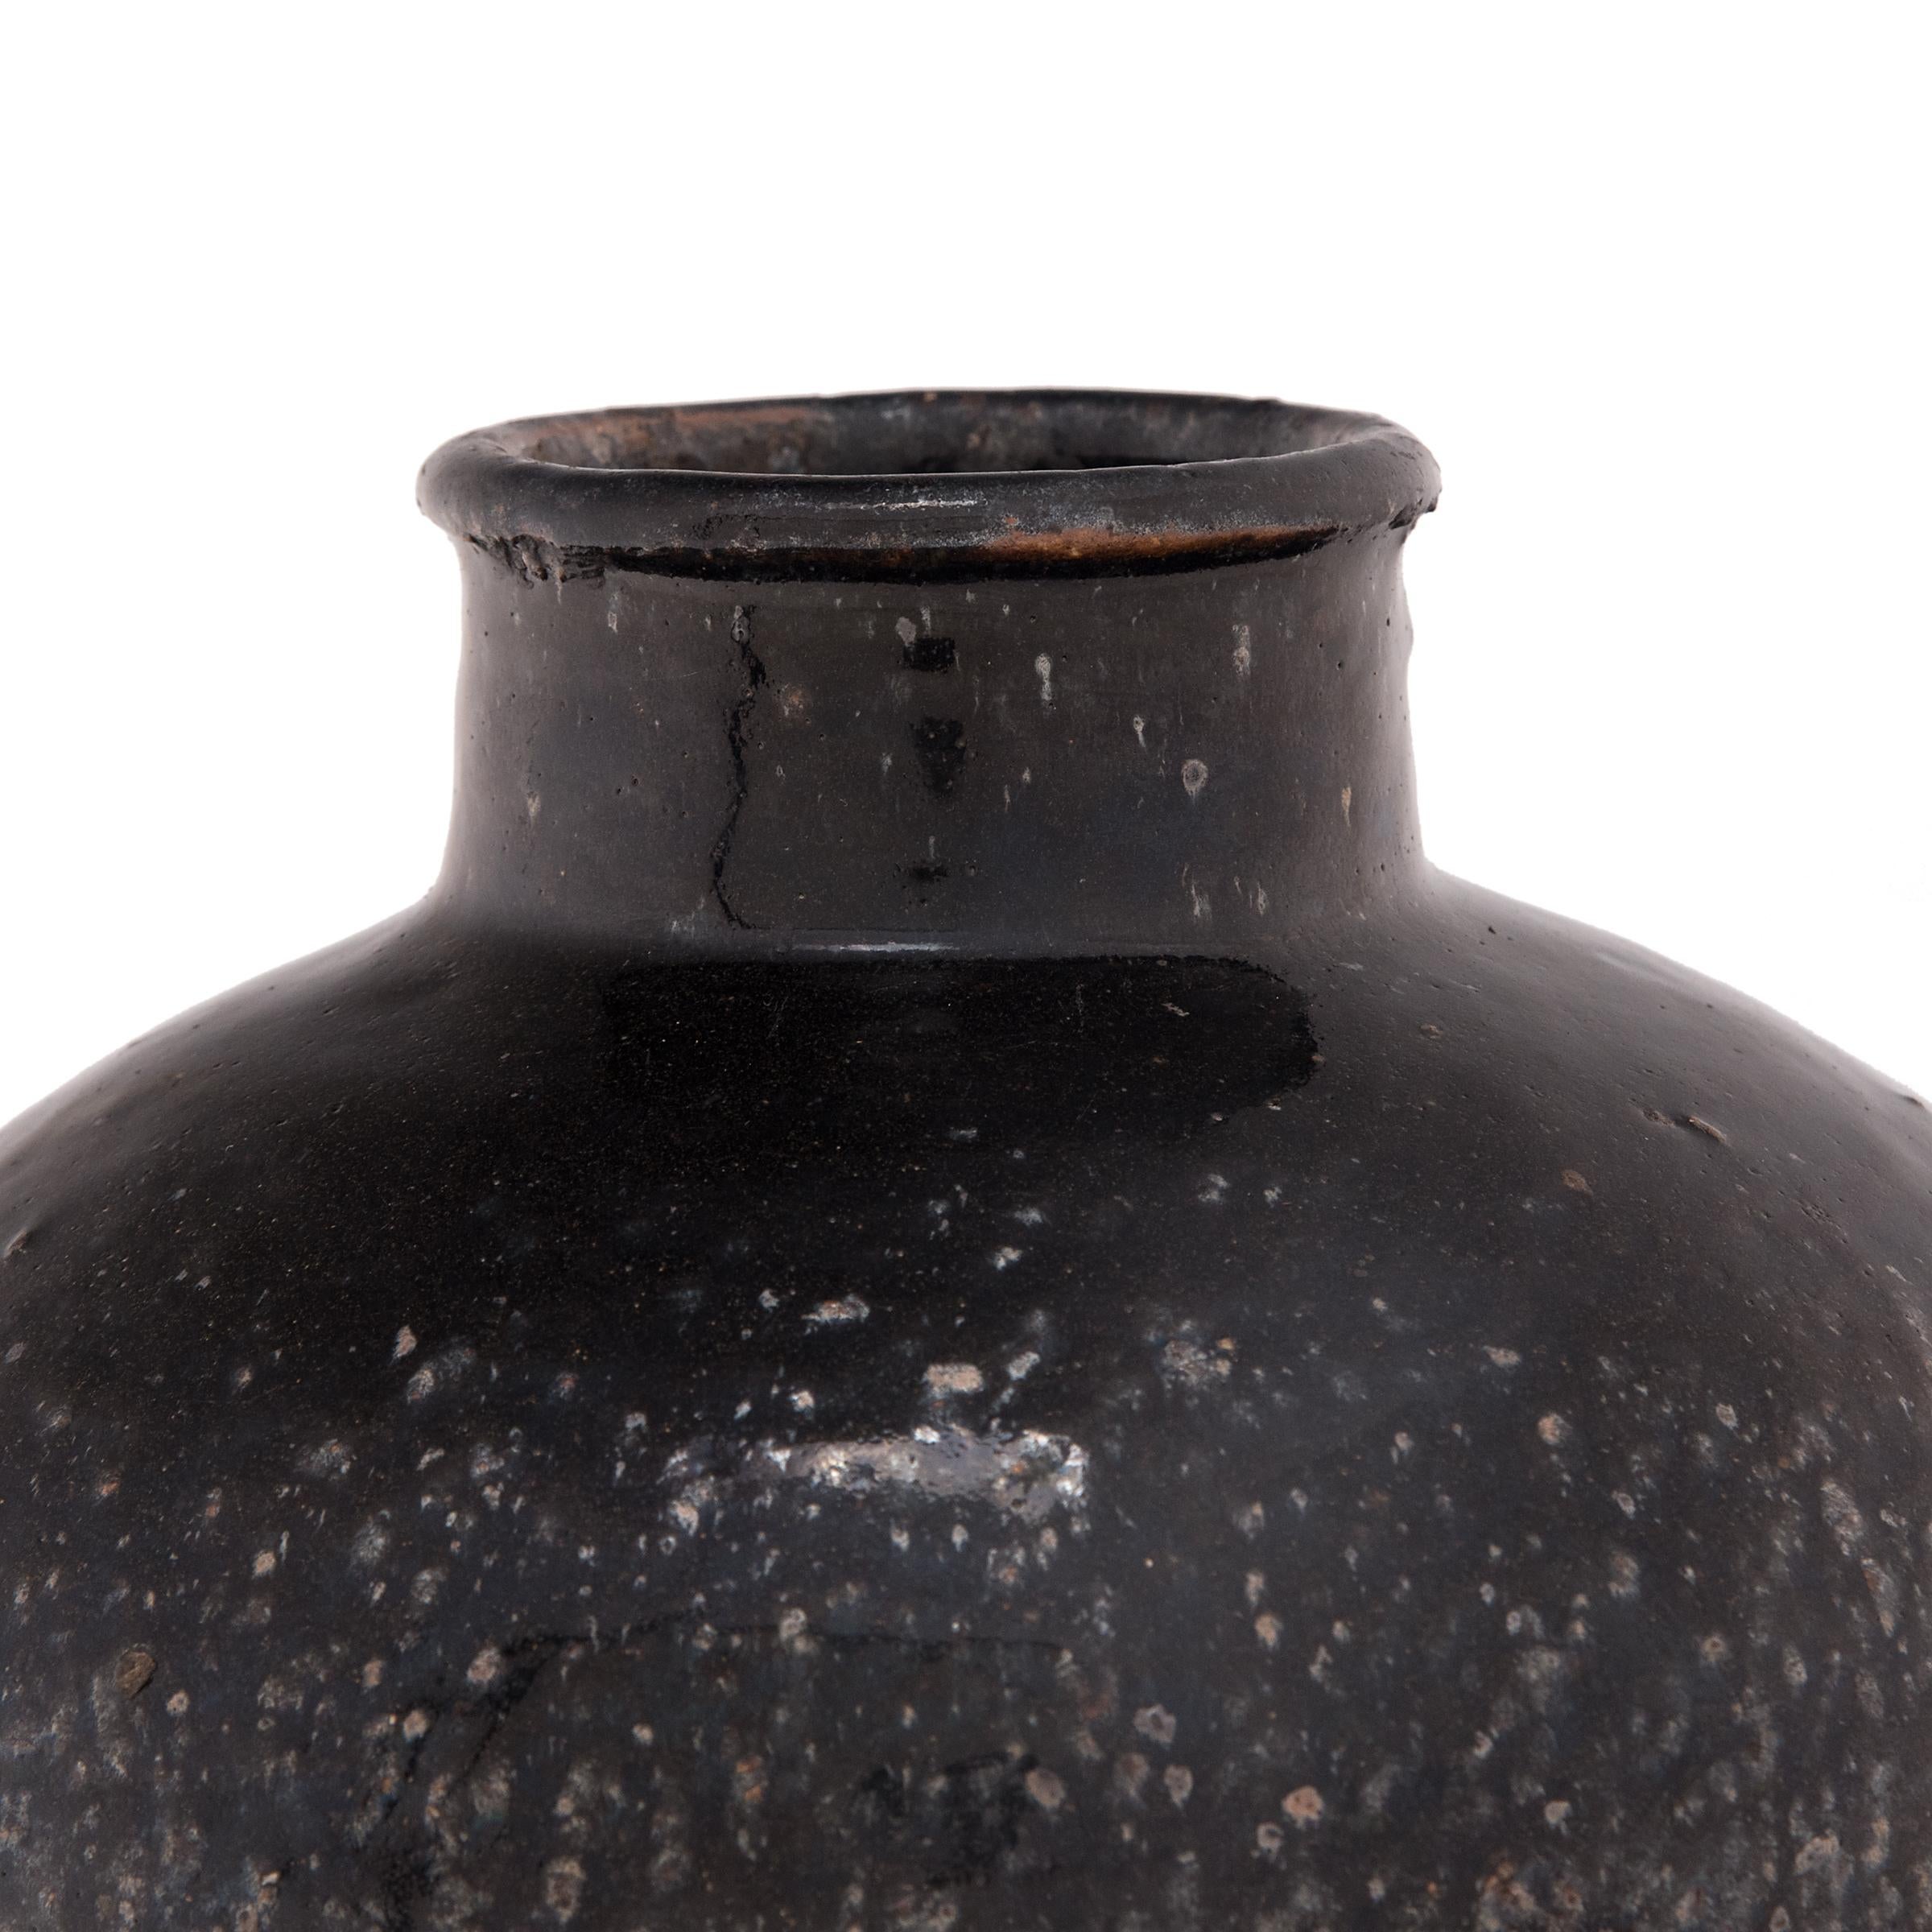 20th Century Chinese Brown Glazed Wine Jar, c. 1900